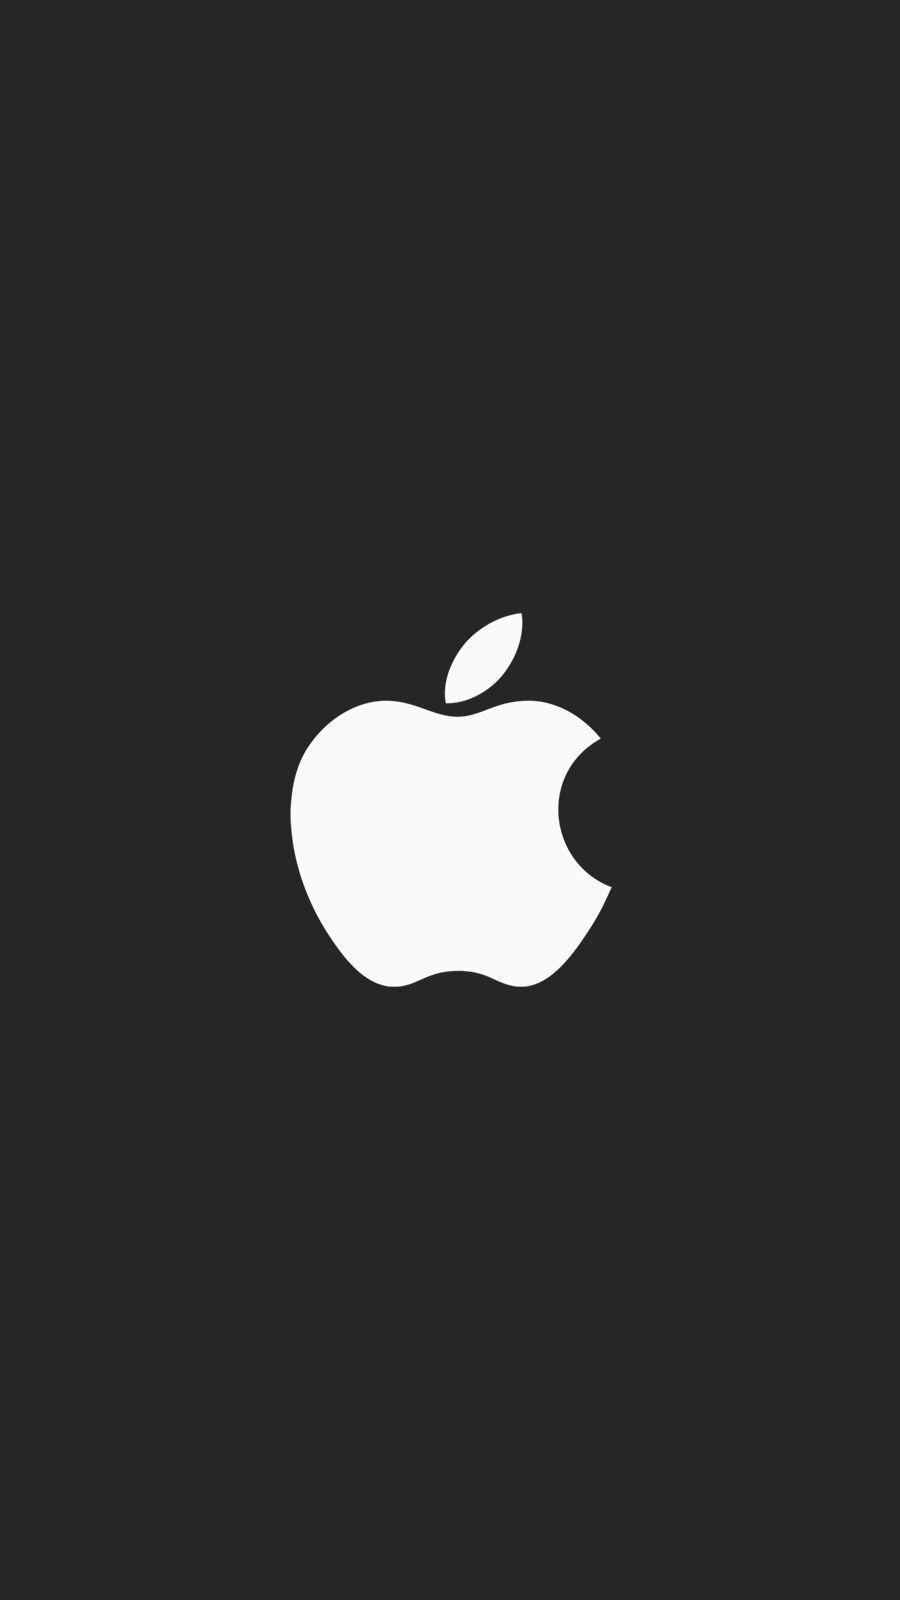 iPhone 8 Logo - Apple minimal logo black iPhone Wallpaper | iphone 5s wallpapers in ...